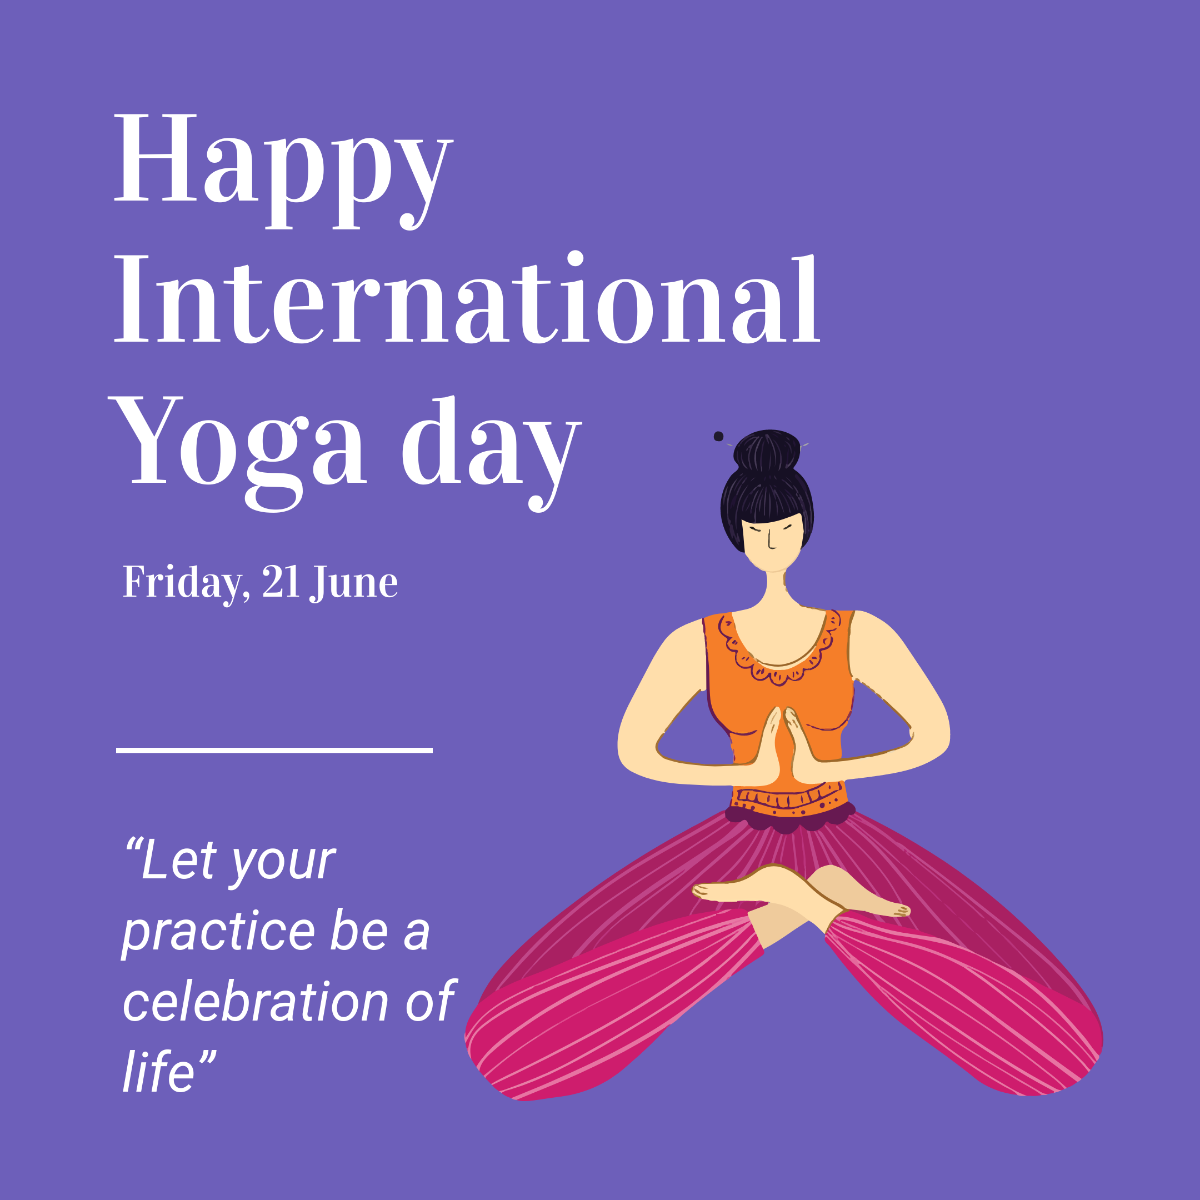 International Yoga Day Instagram Post Template